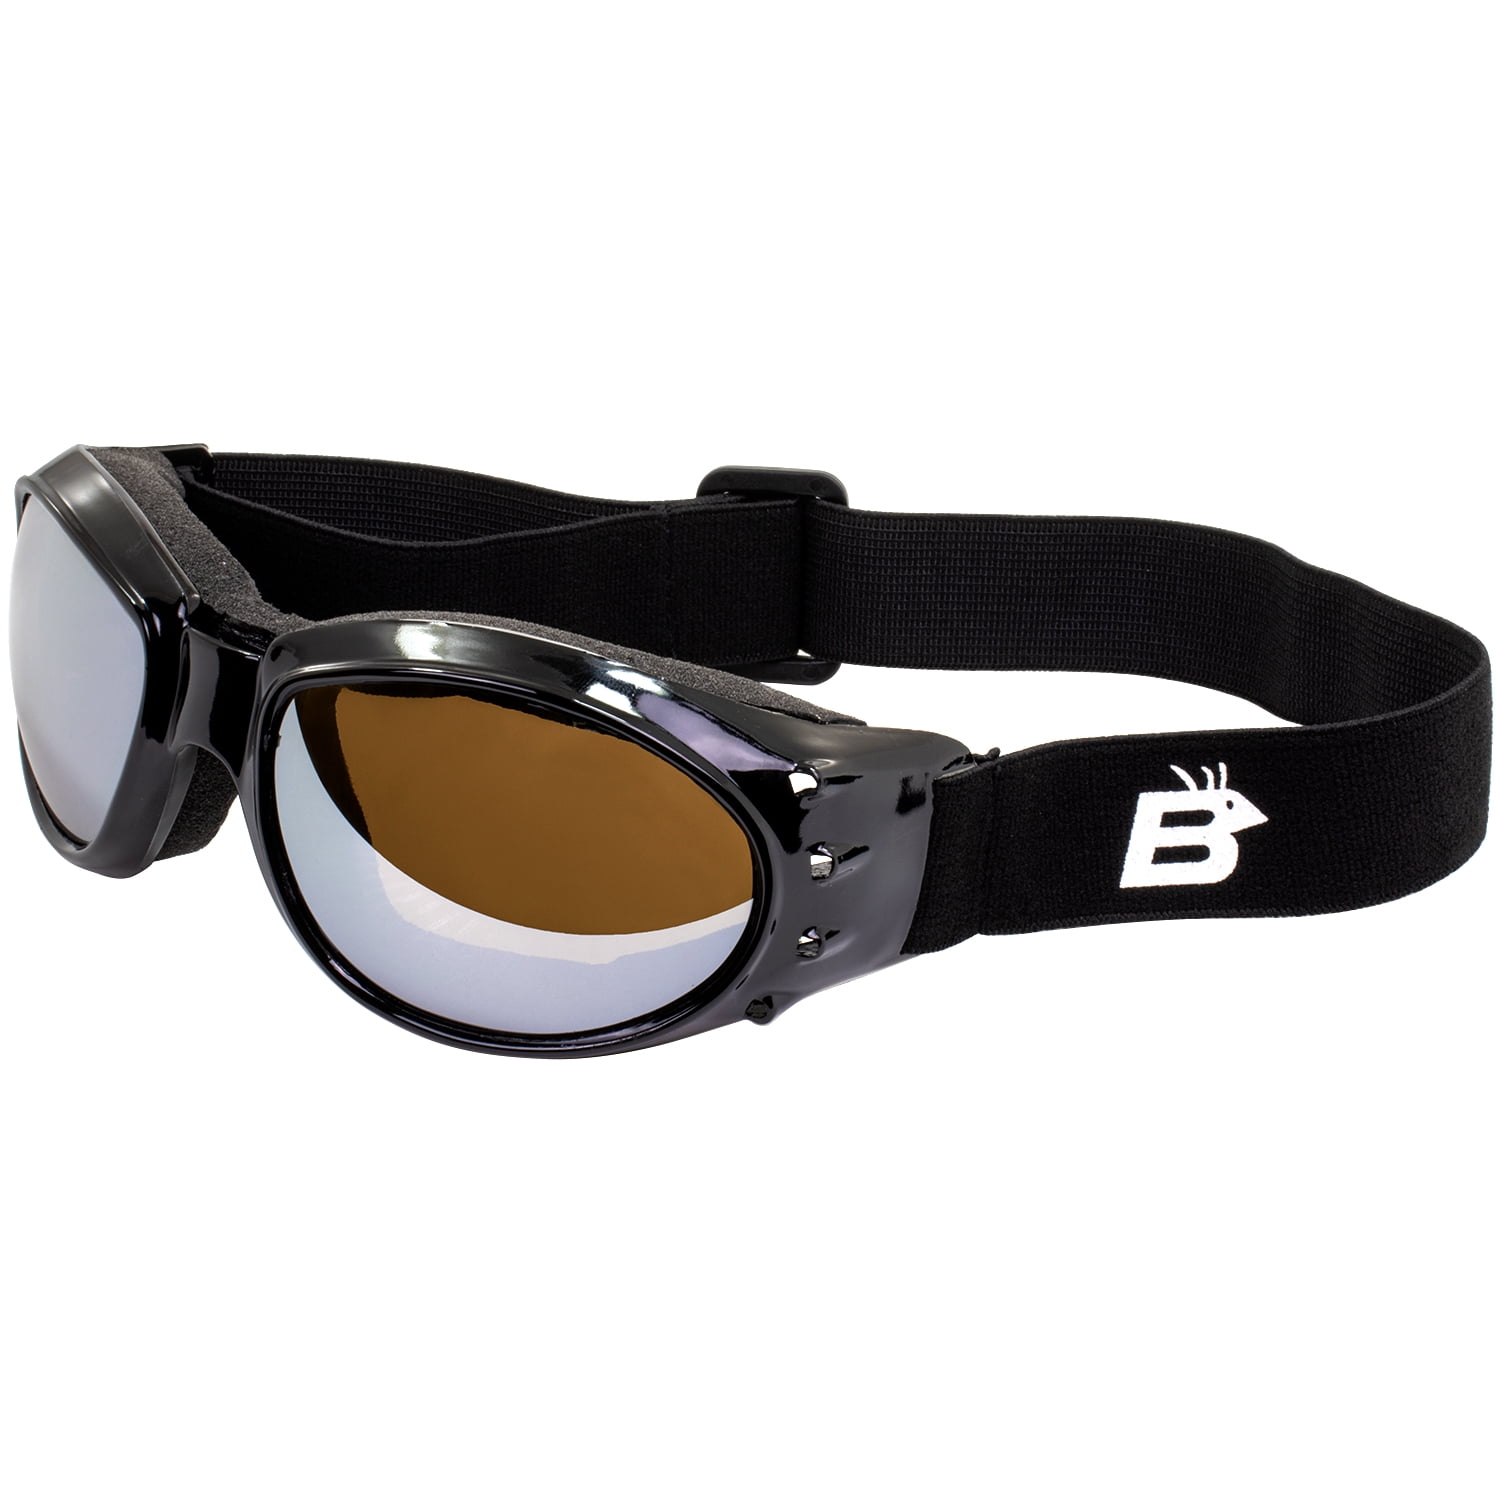 Birdz Eyewear Skylark Motorcycle Goggles Face Mask Black Frames Red Mirror Lens